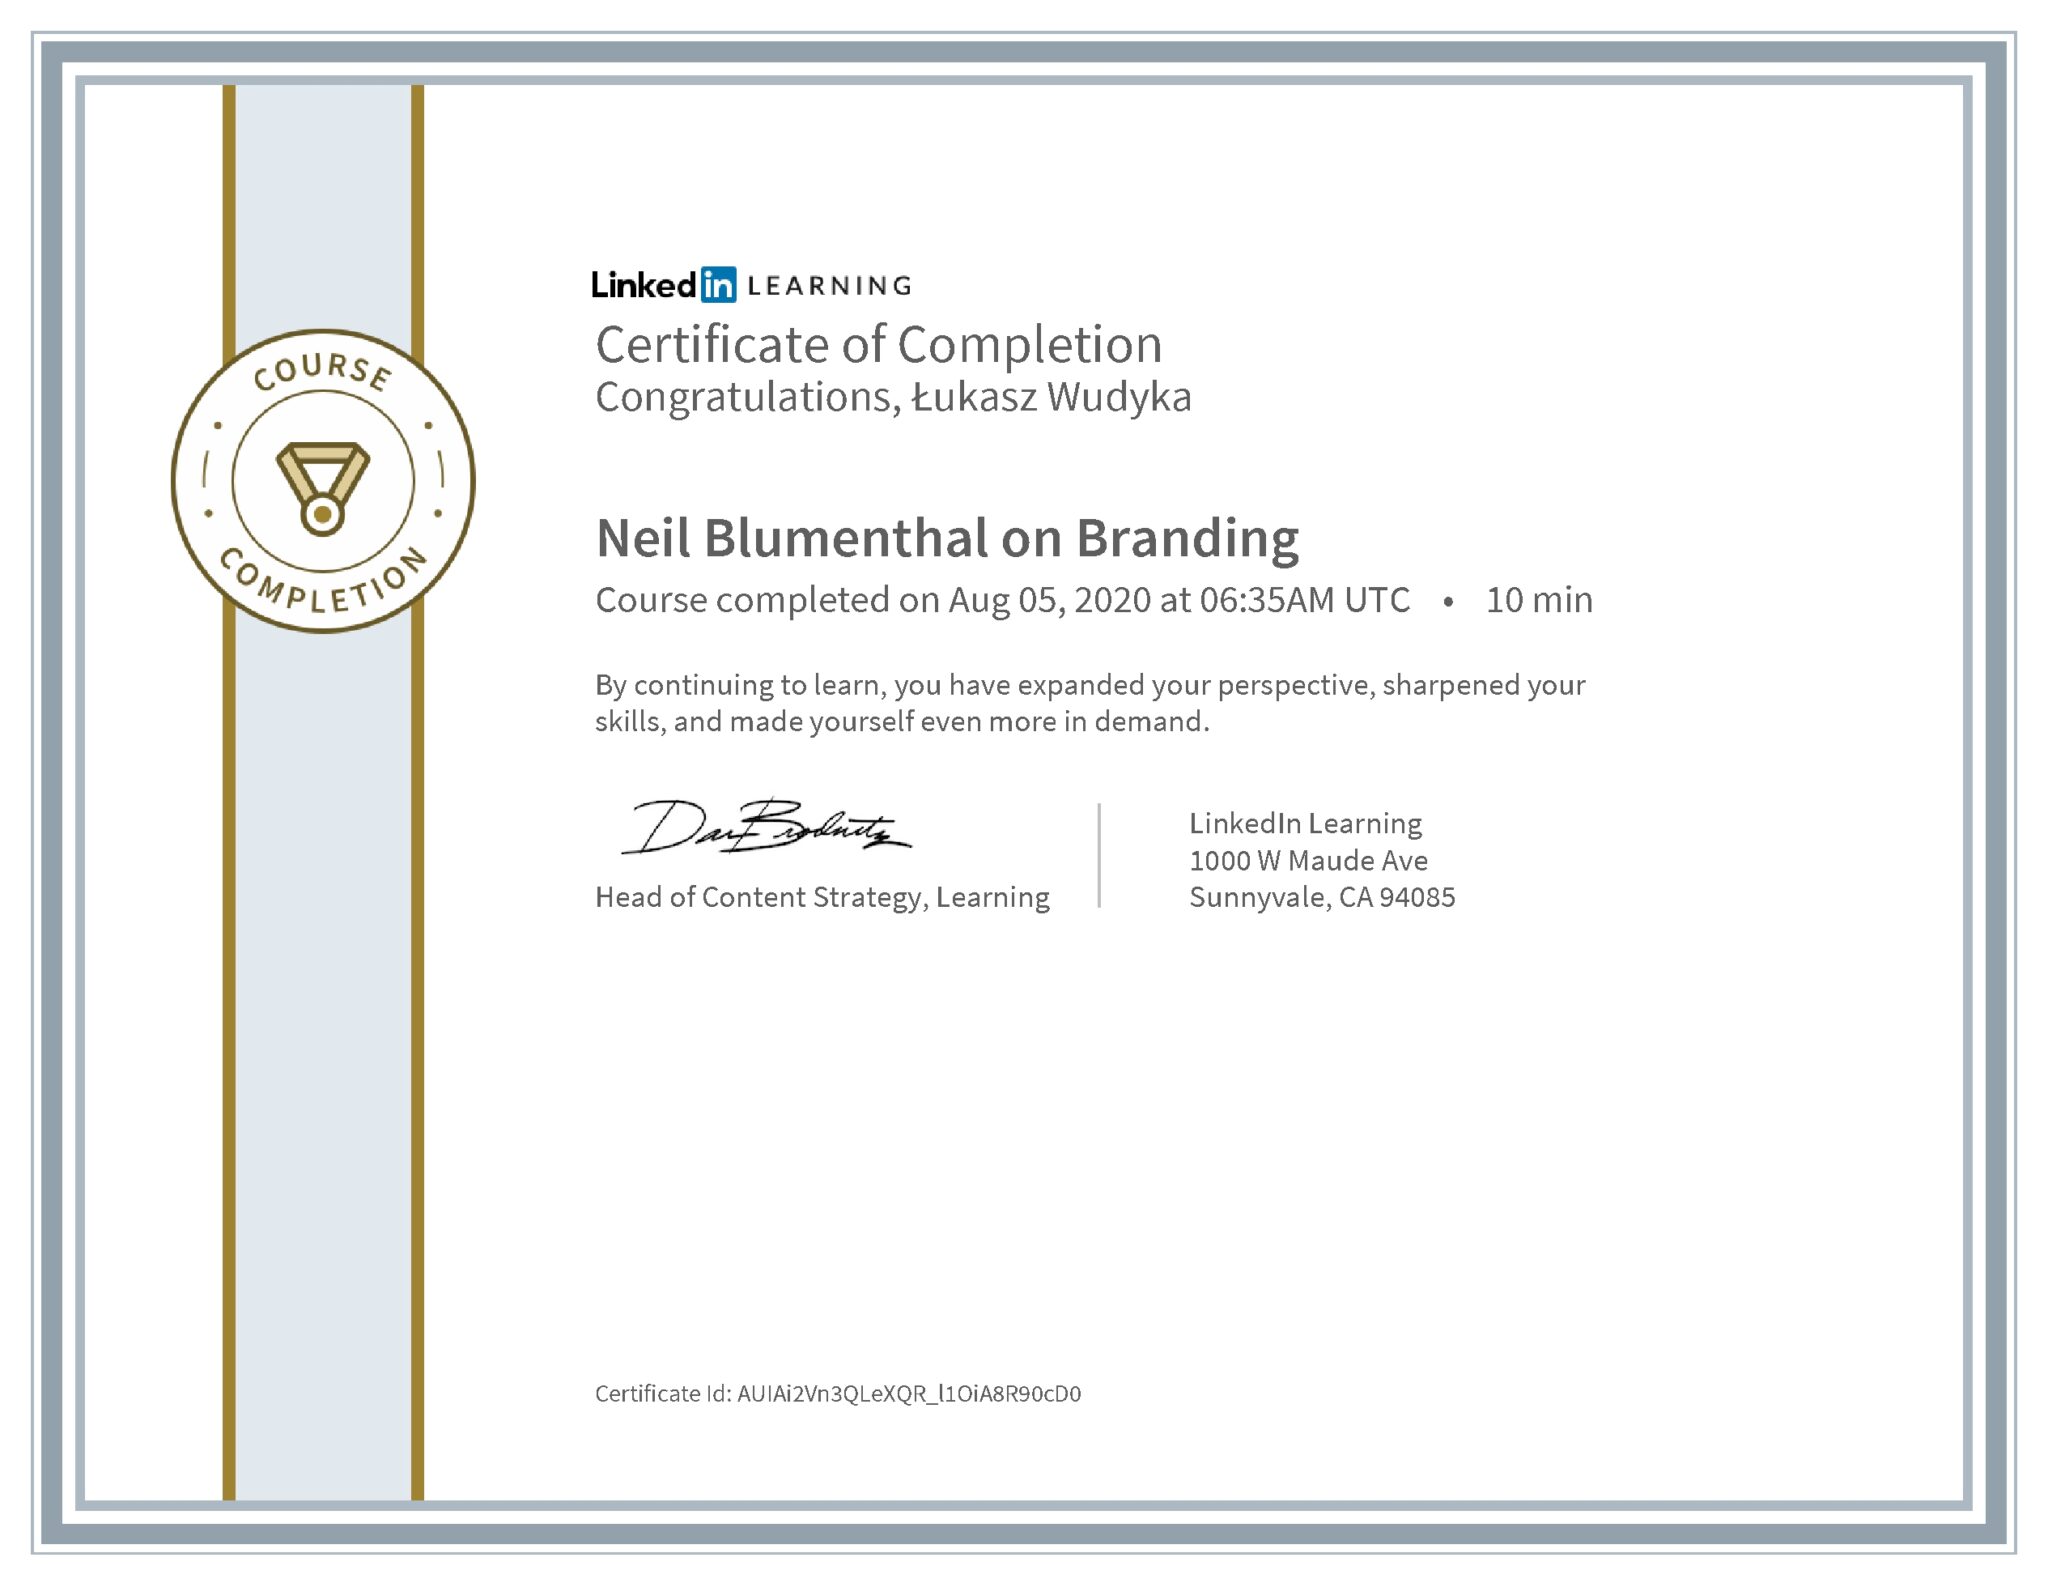 Łukasz Wudyka certyfikat LinkedIn Neil Blumenthal on Branding